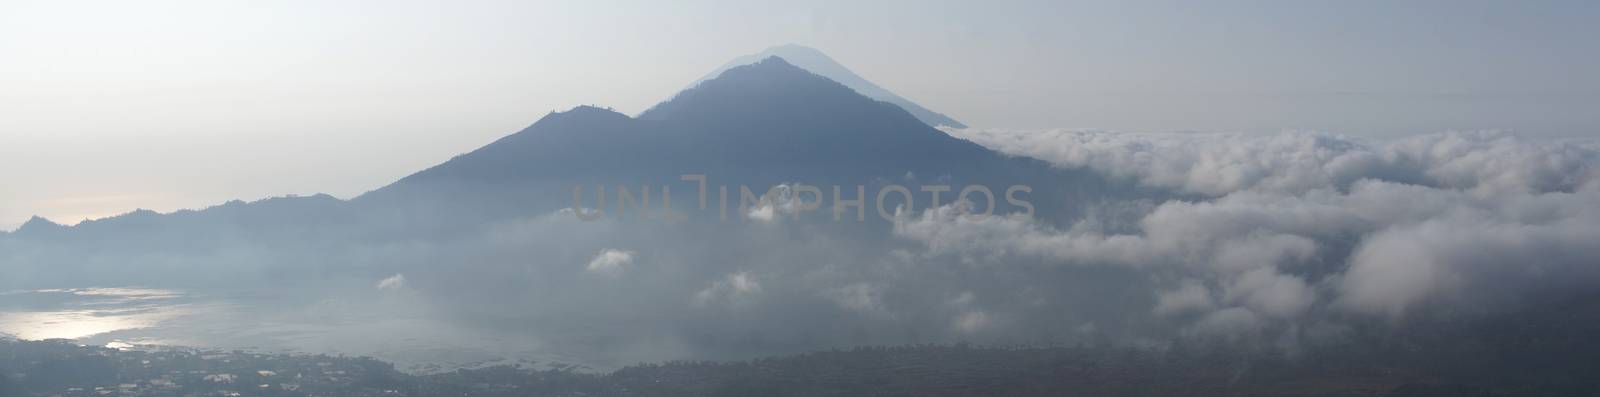 Mount Batur, Bali, Indonesia by alfotokunst